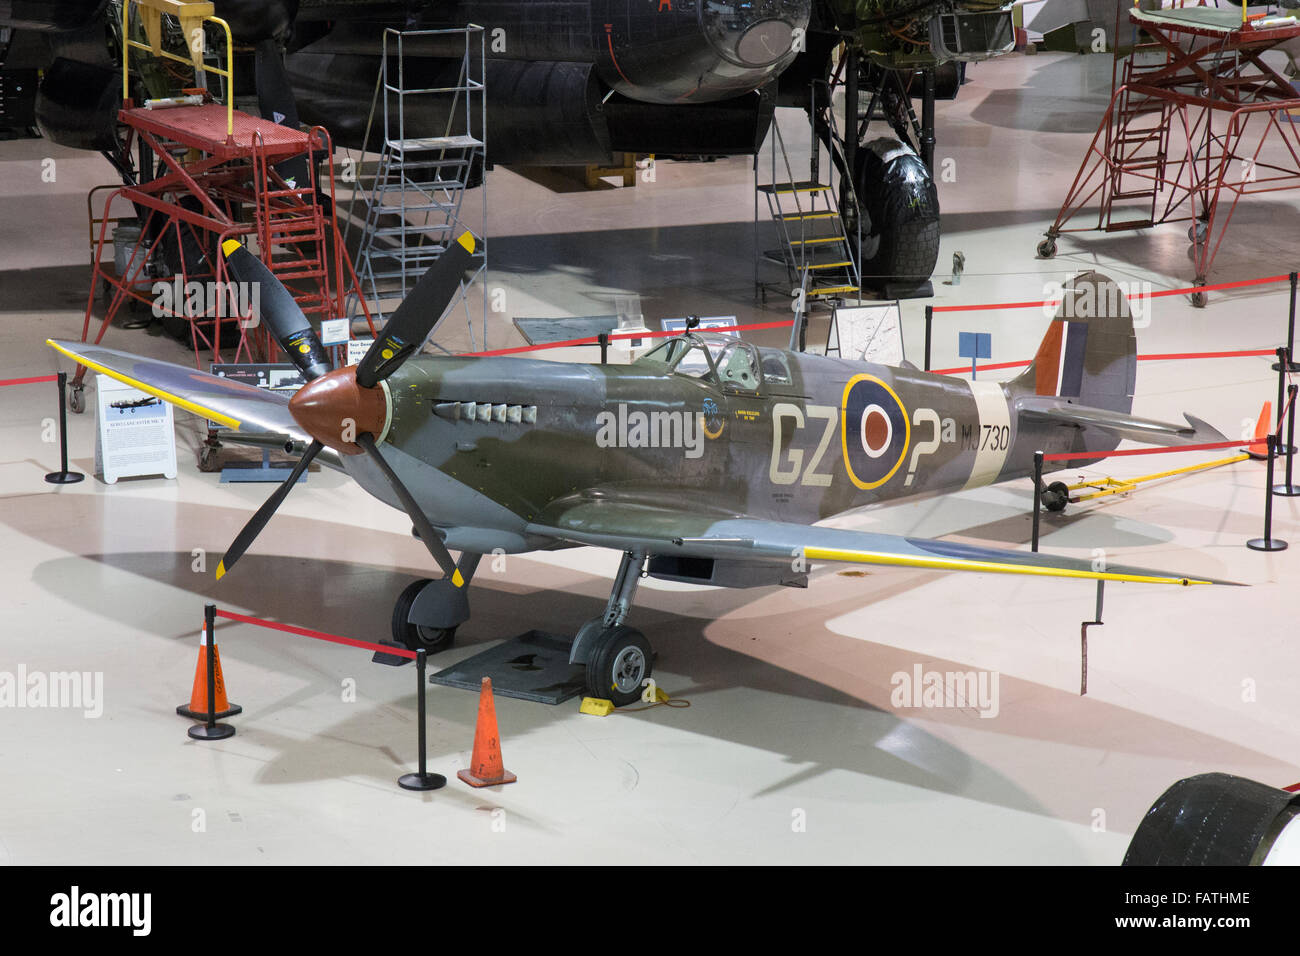 Uno Spitfire Seconda Guerra Mondiale aereo all'interno del Canadian Warplane Heritage Museum di Hamilton, Ontario, Canada Foto Stock